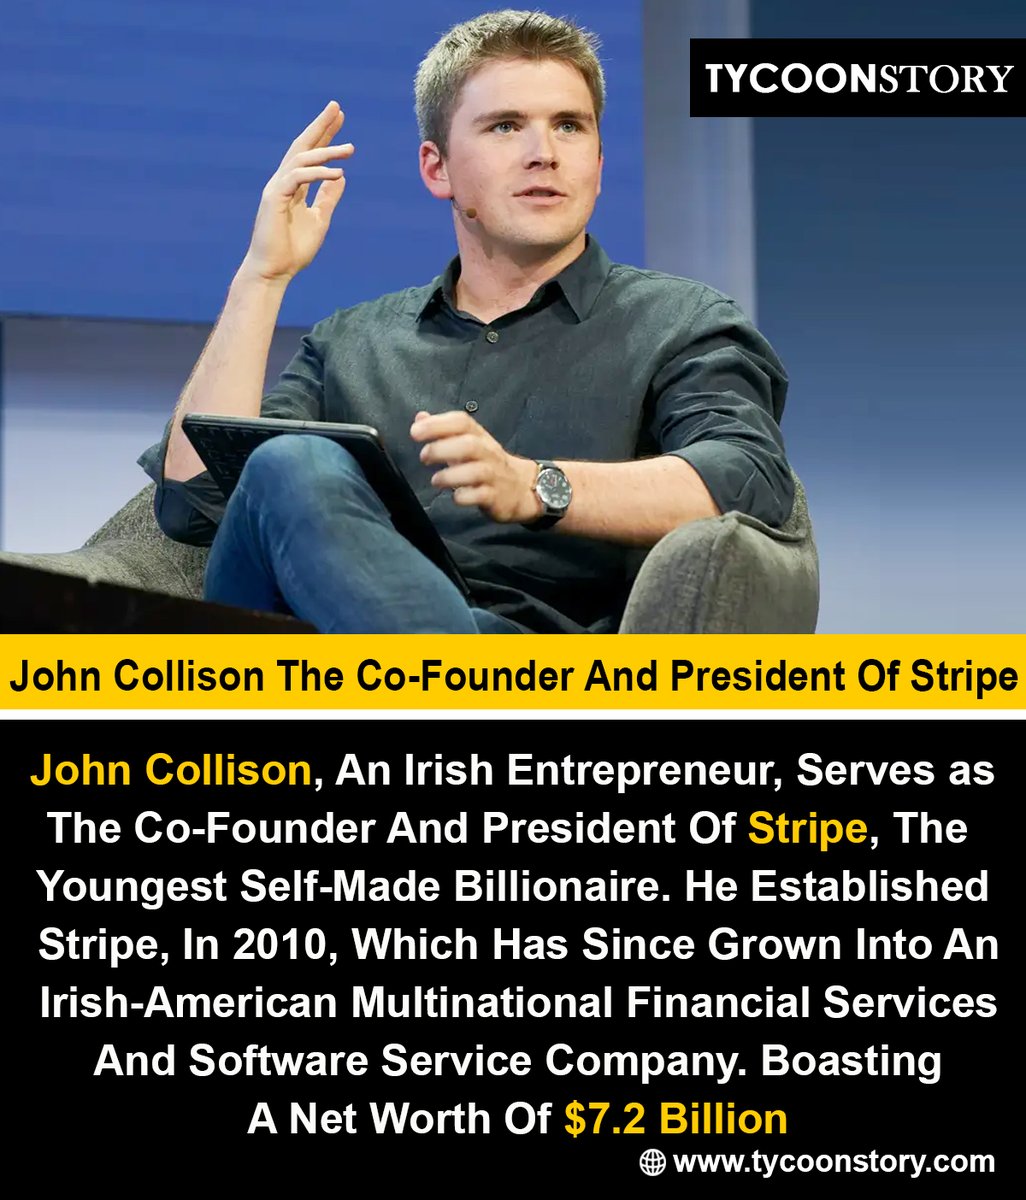 John Collison The Co-Founder And President Of Stripe #JohnCollison #Stripe #TechLeader #Entrepreneur #Innovation #Fintech #Leadership #BusinessInsights #Innovator #Disruptor #TechVisionary #DigitalPayments #SaaS #StartupFounder @stripe tycoonstory.com